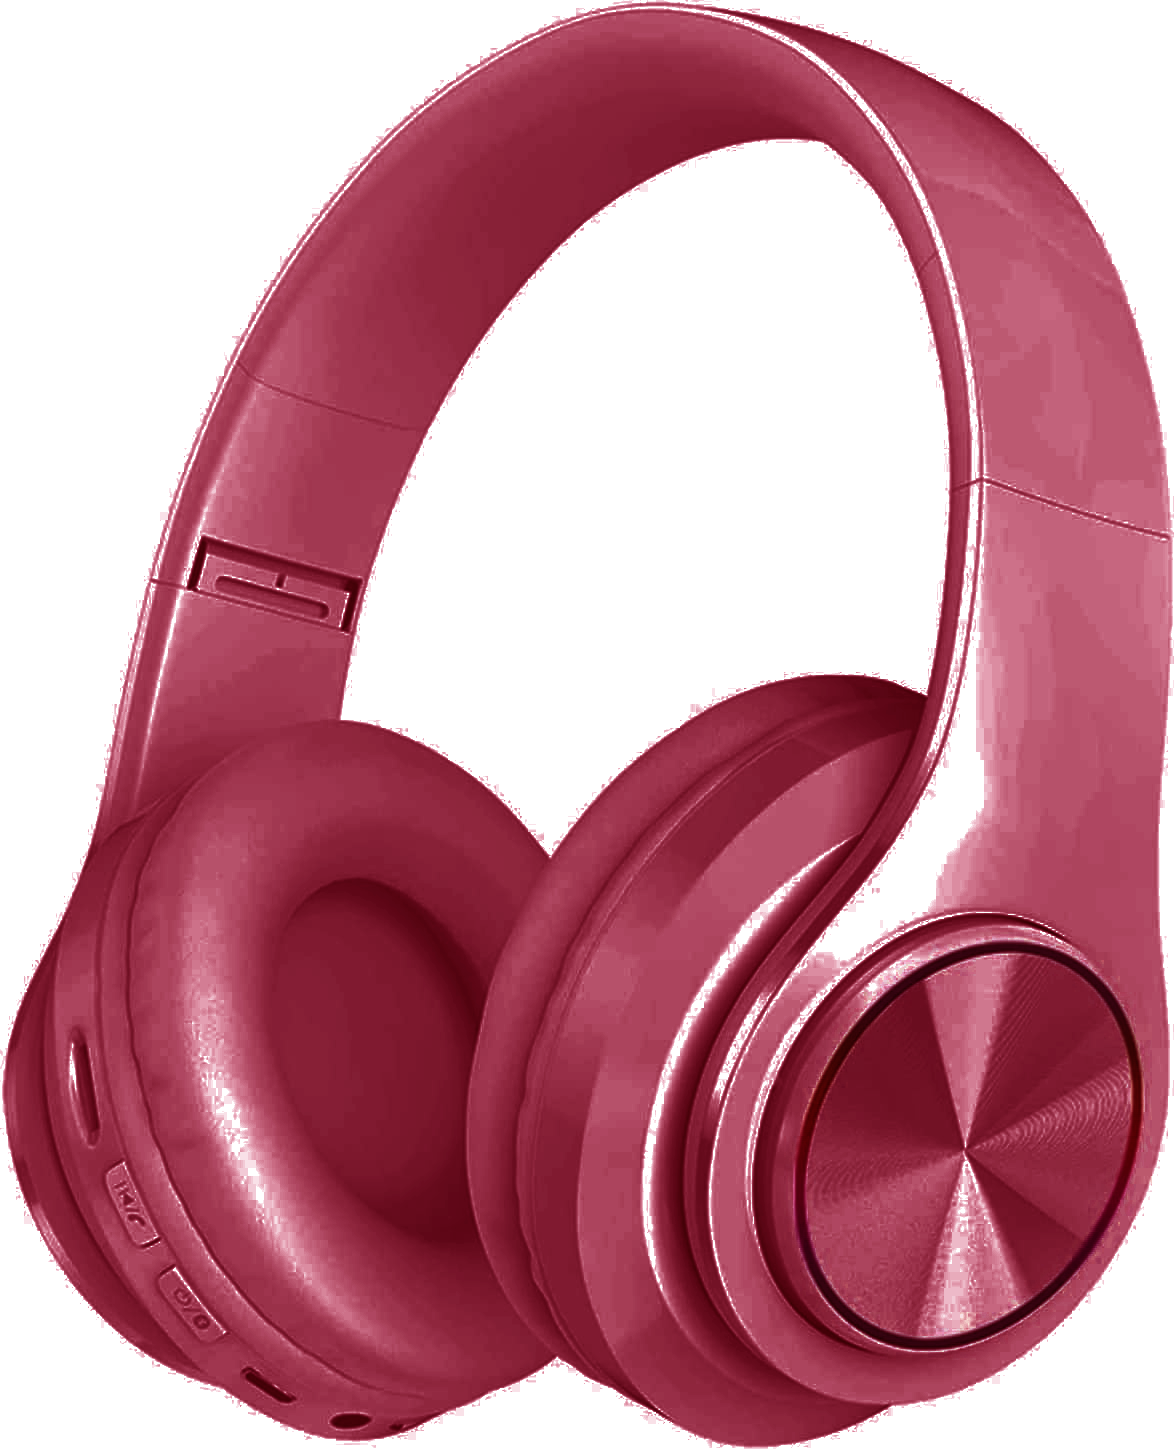 Auriculares diadema sony microfono rosa